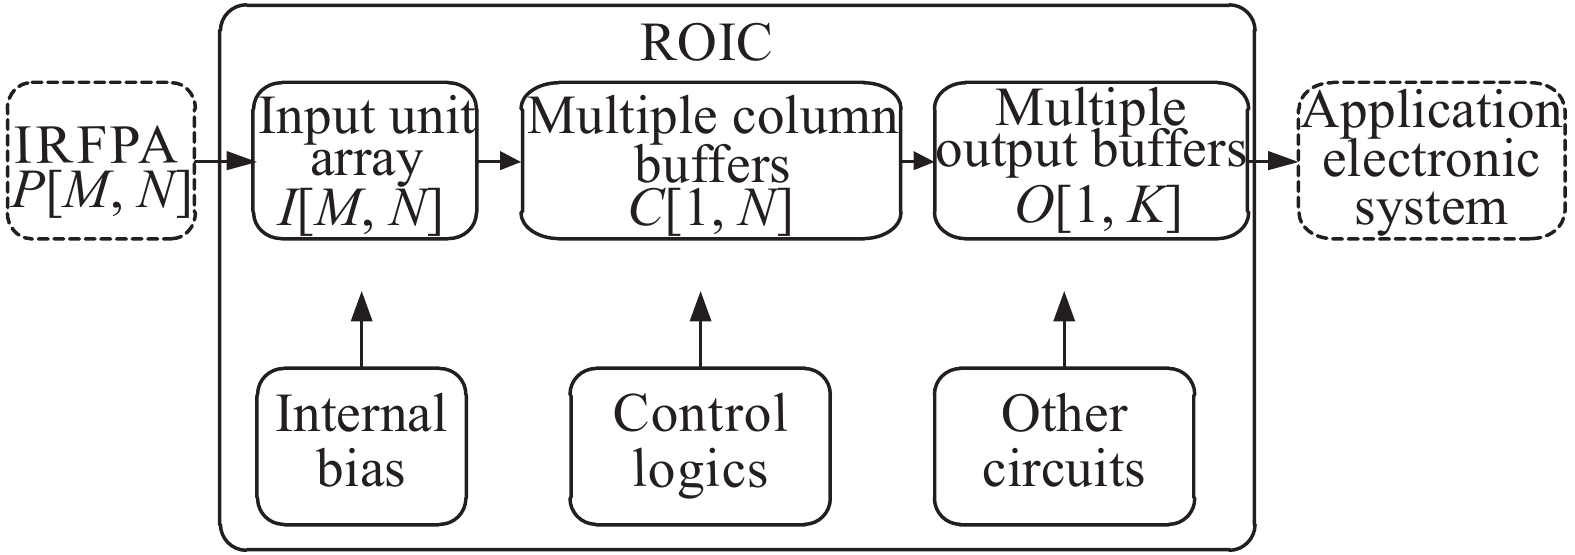 Common architecture of analog ROIC